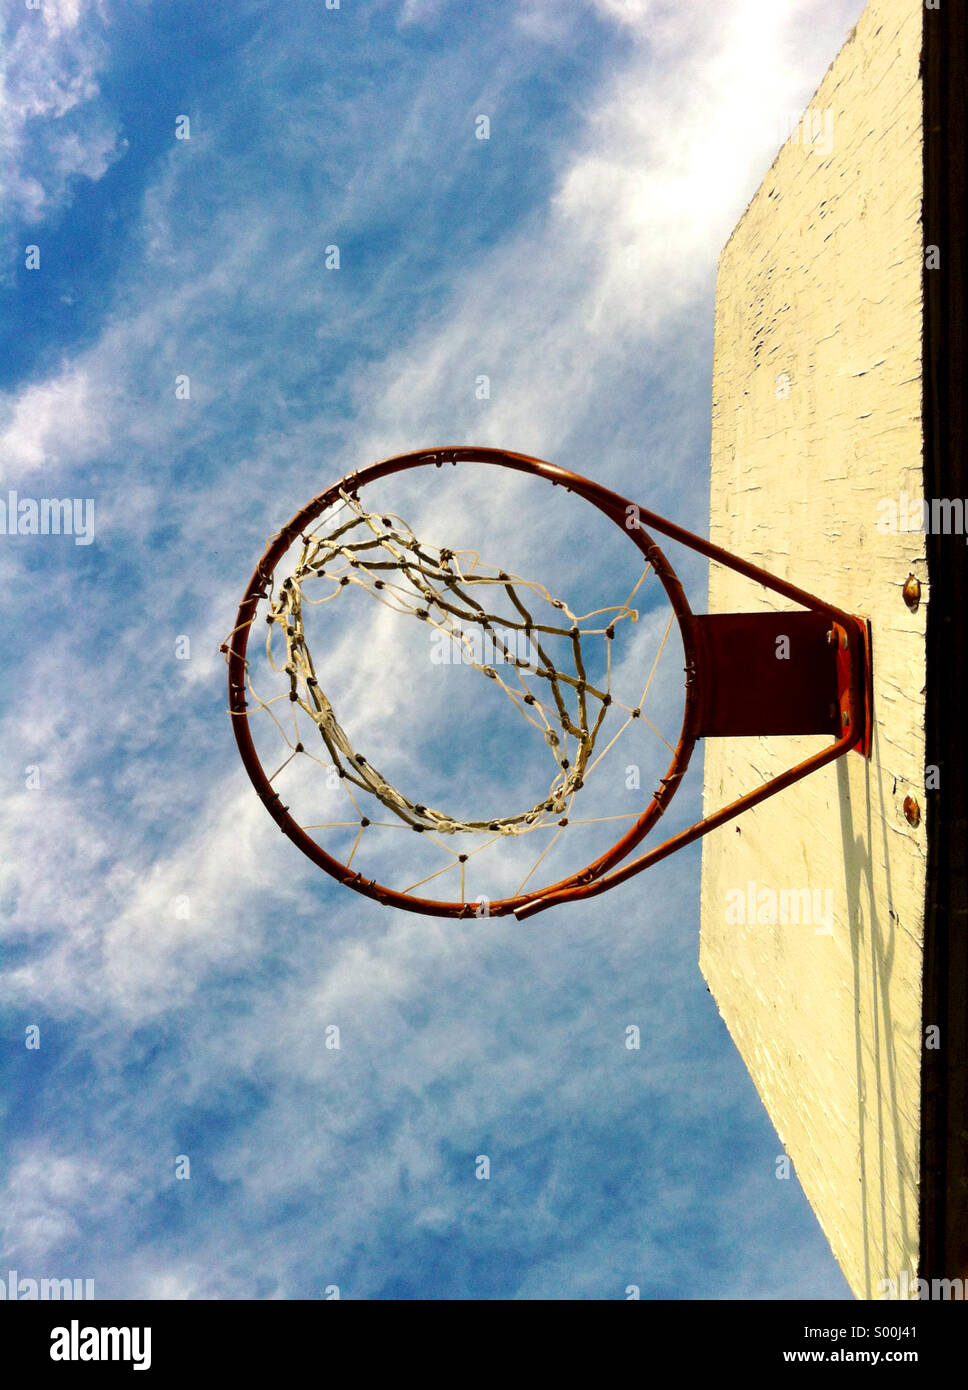 Looking up at a basketball hoop. Stock Photo